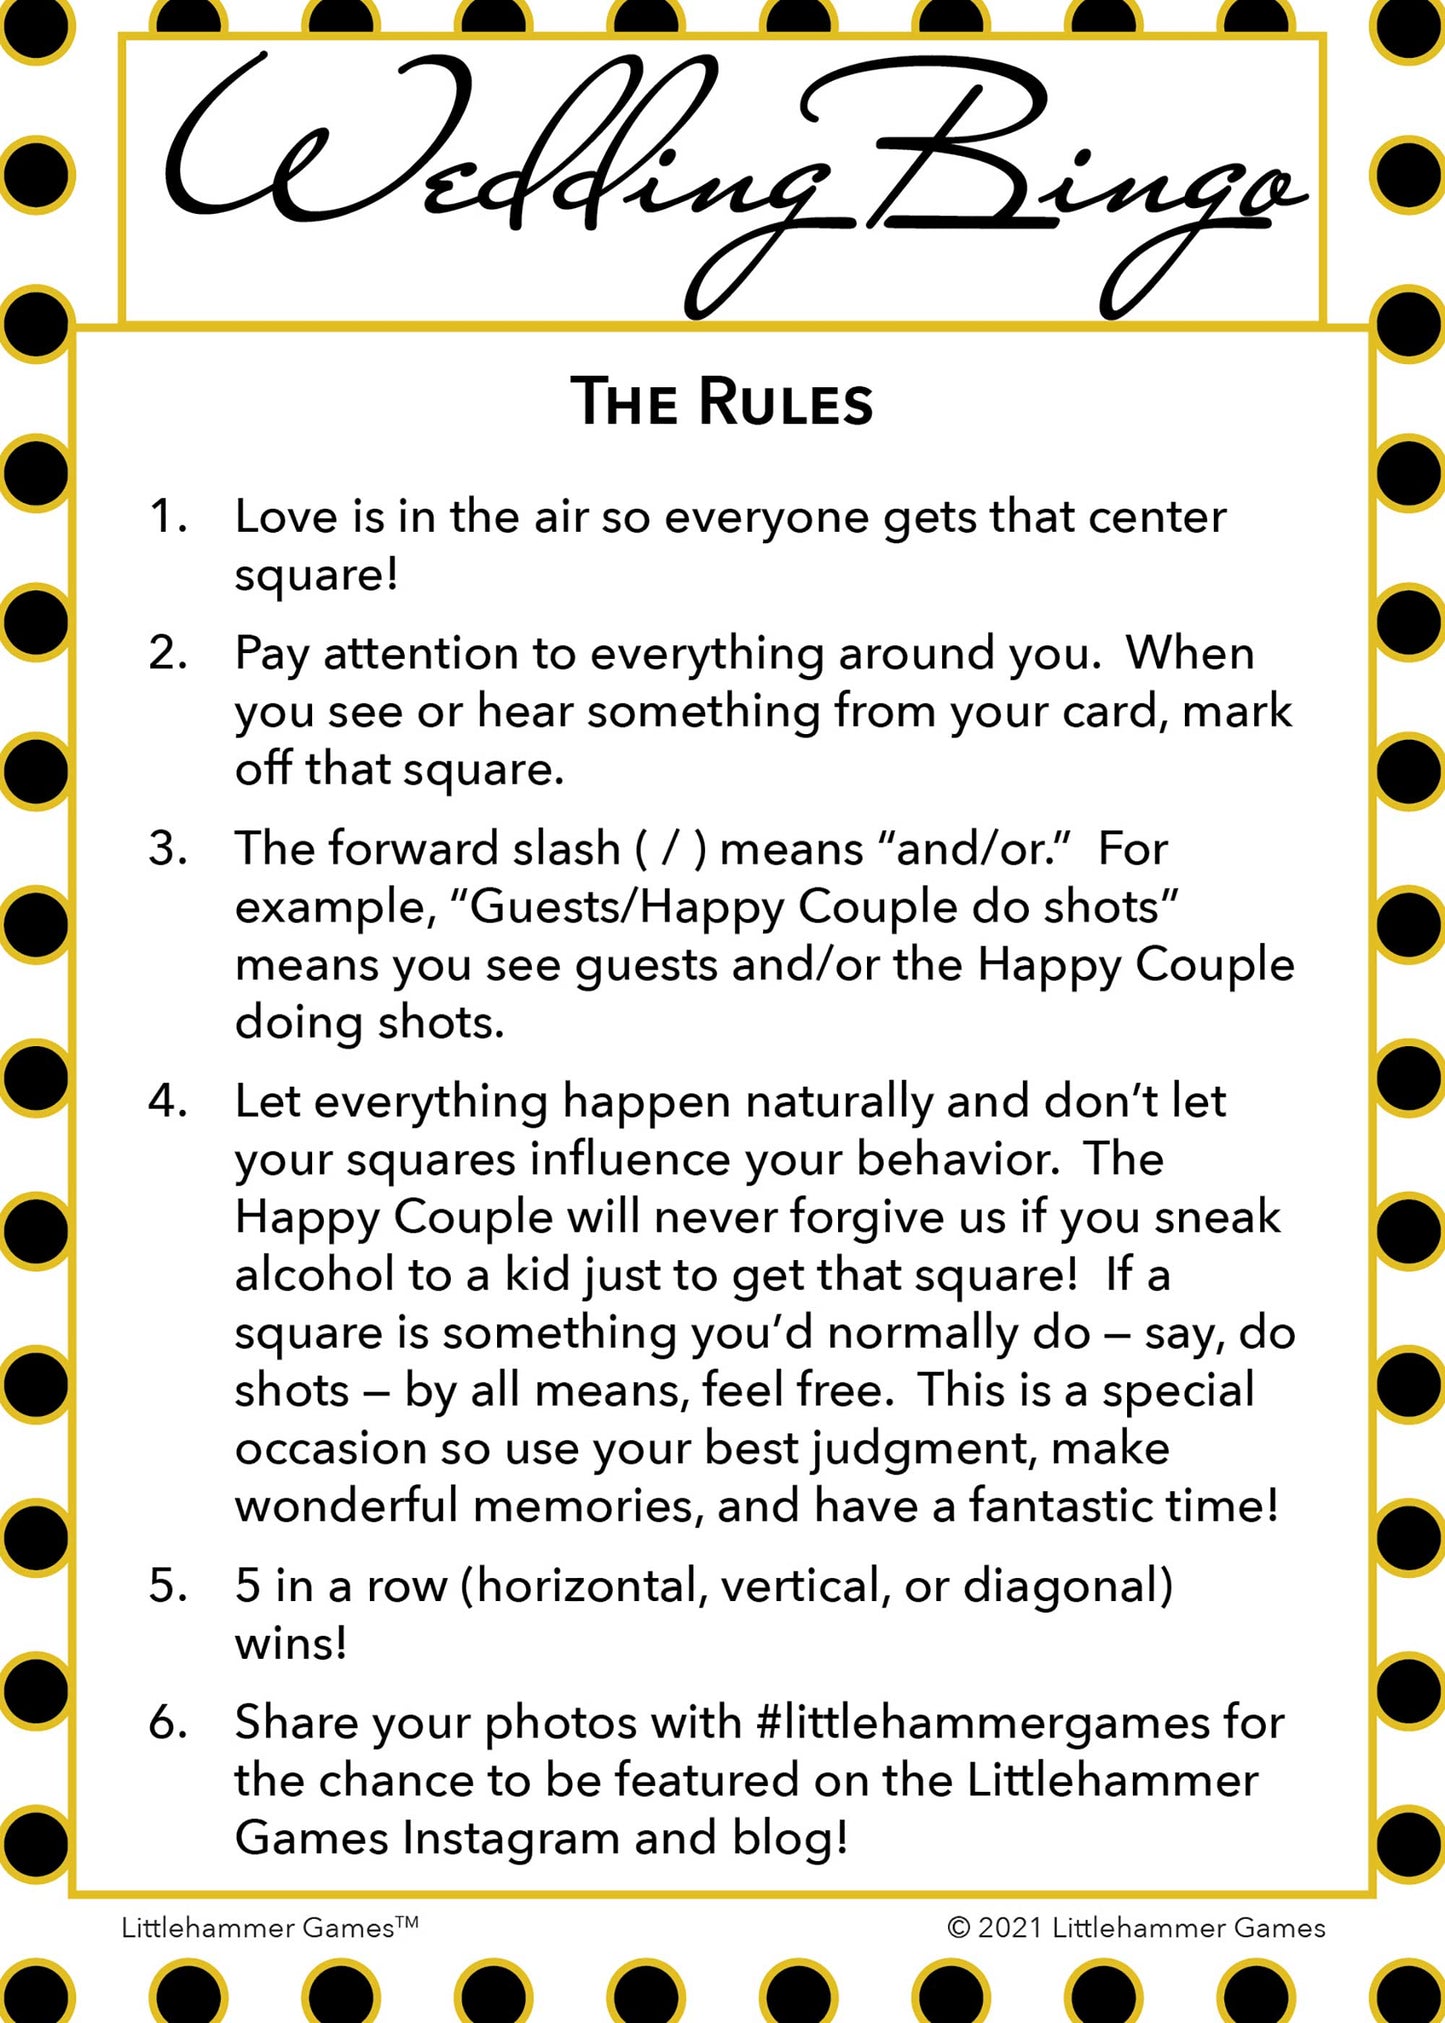 Wedding Bingo rules card on a black and gold polka dot background